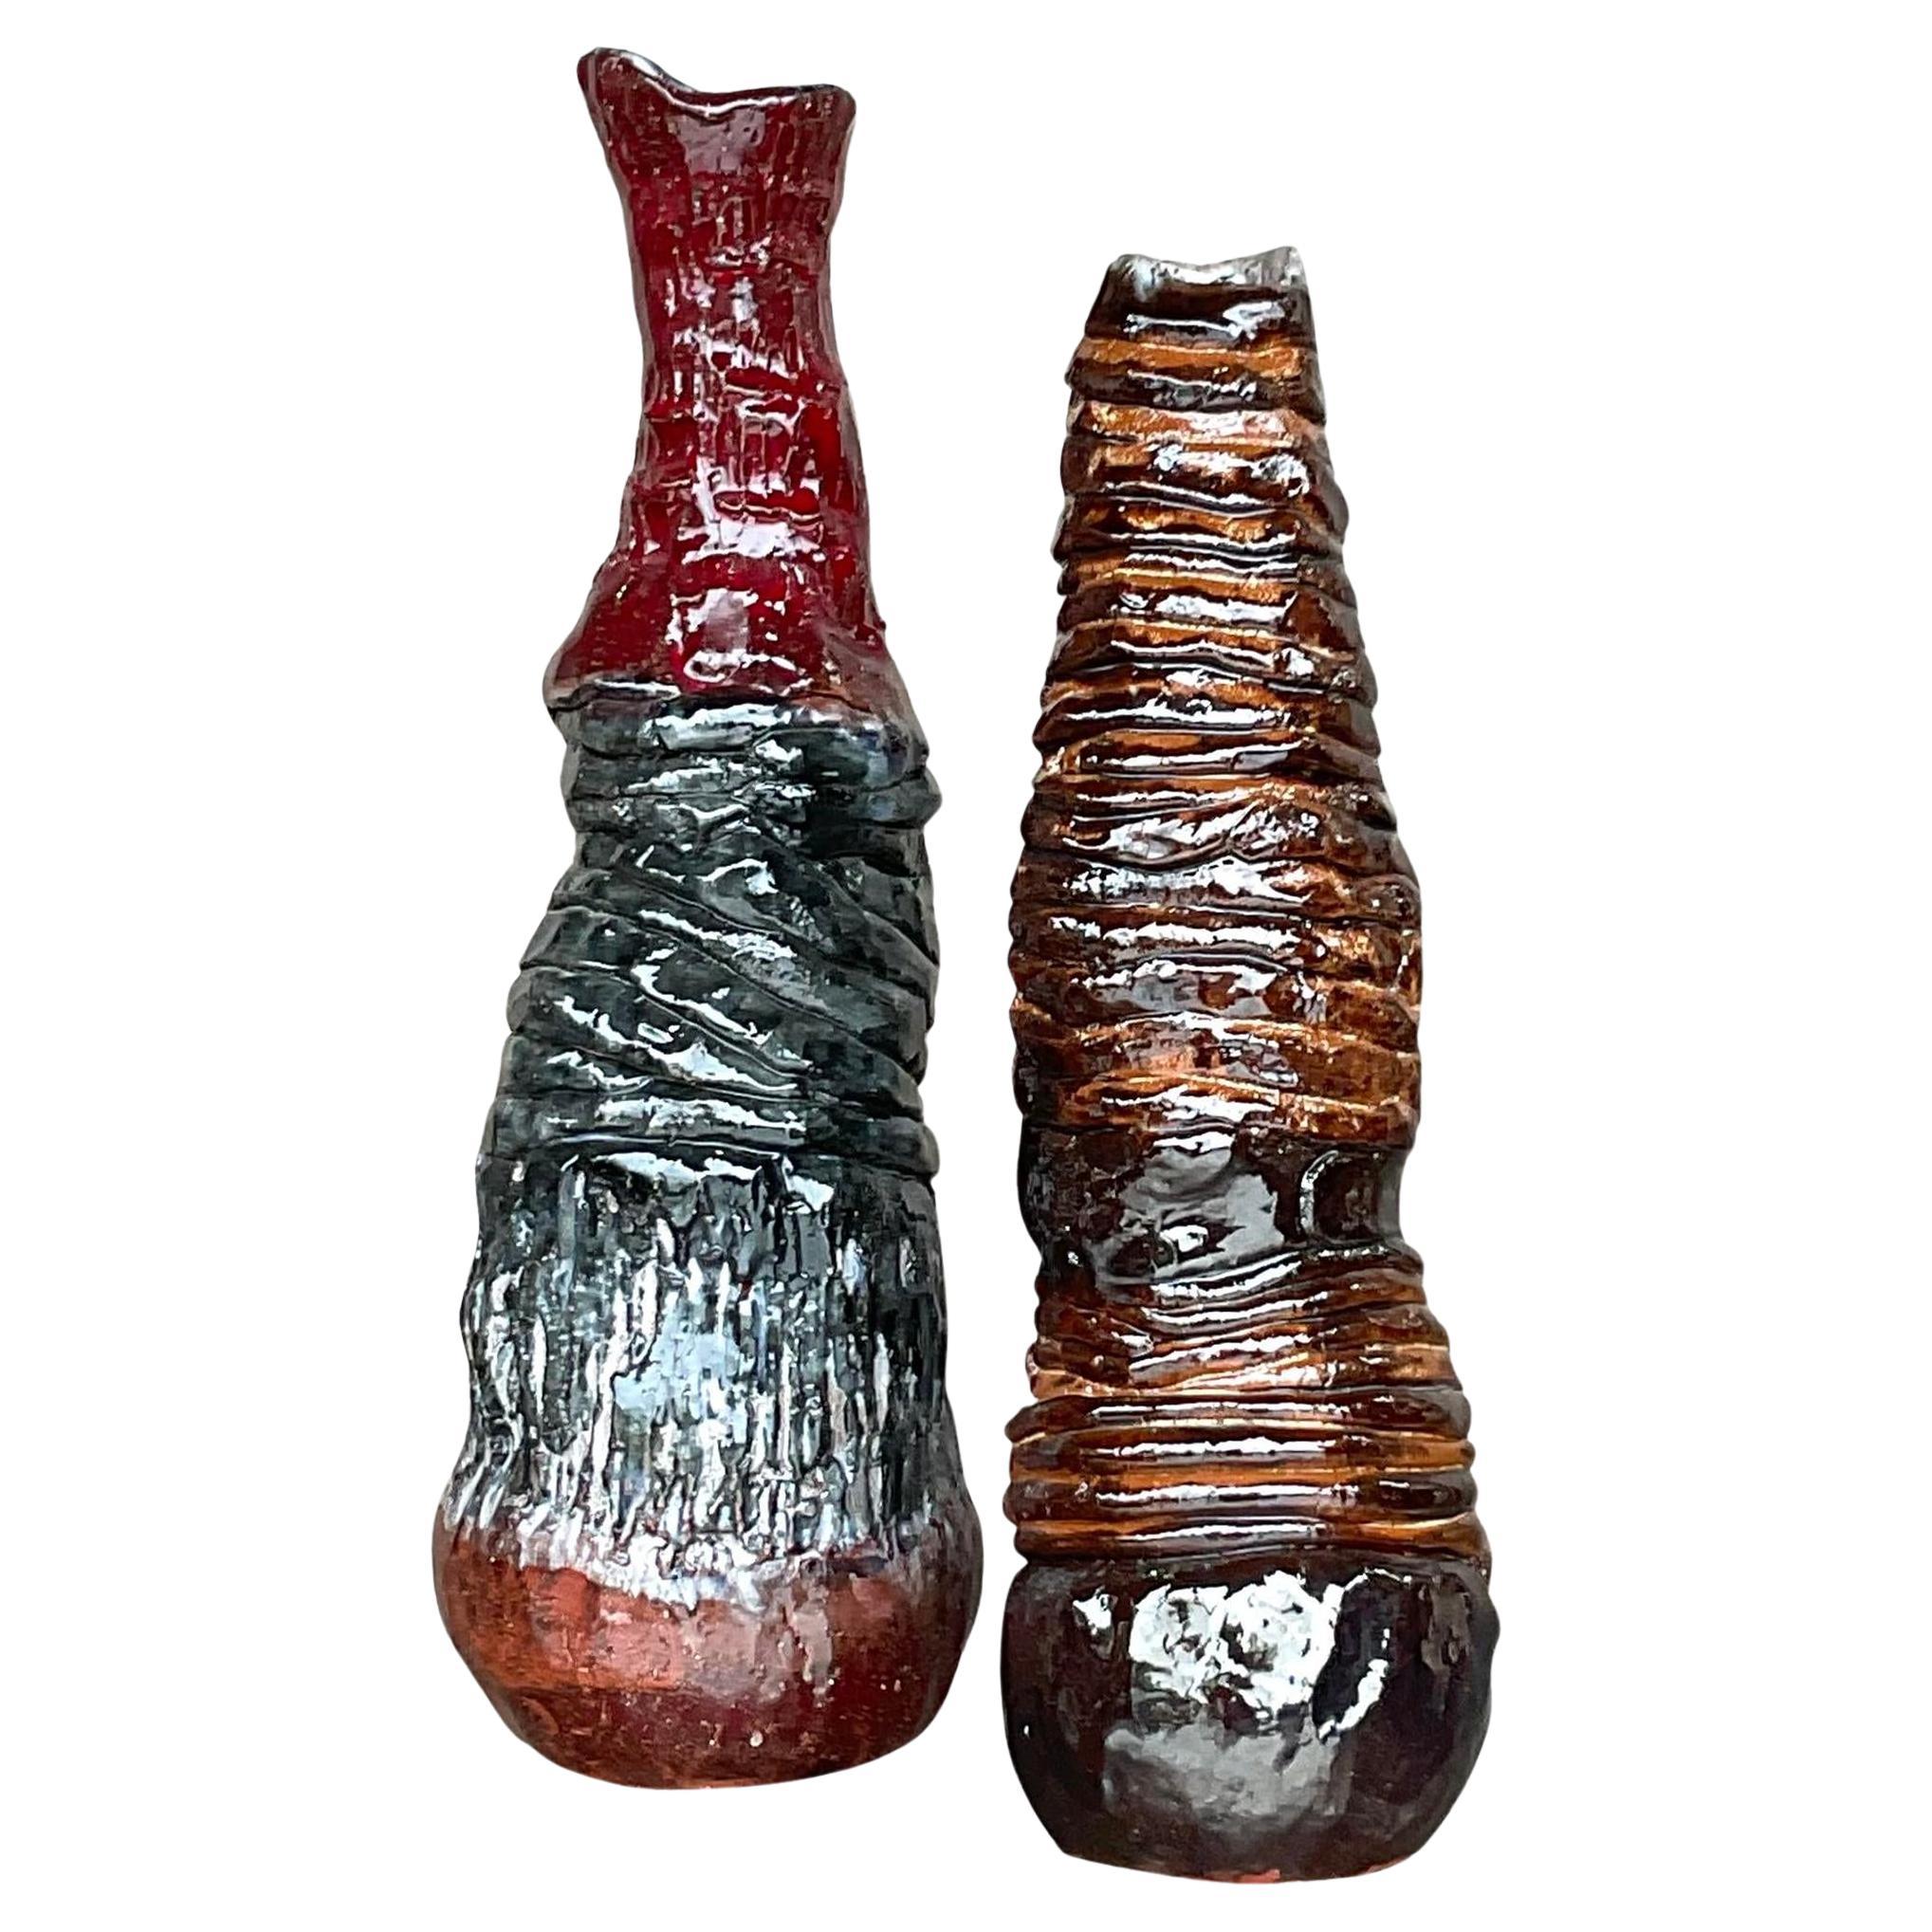 Vintage Boho signiert Hand Made Studio Pottery Vasen - ein Paar